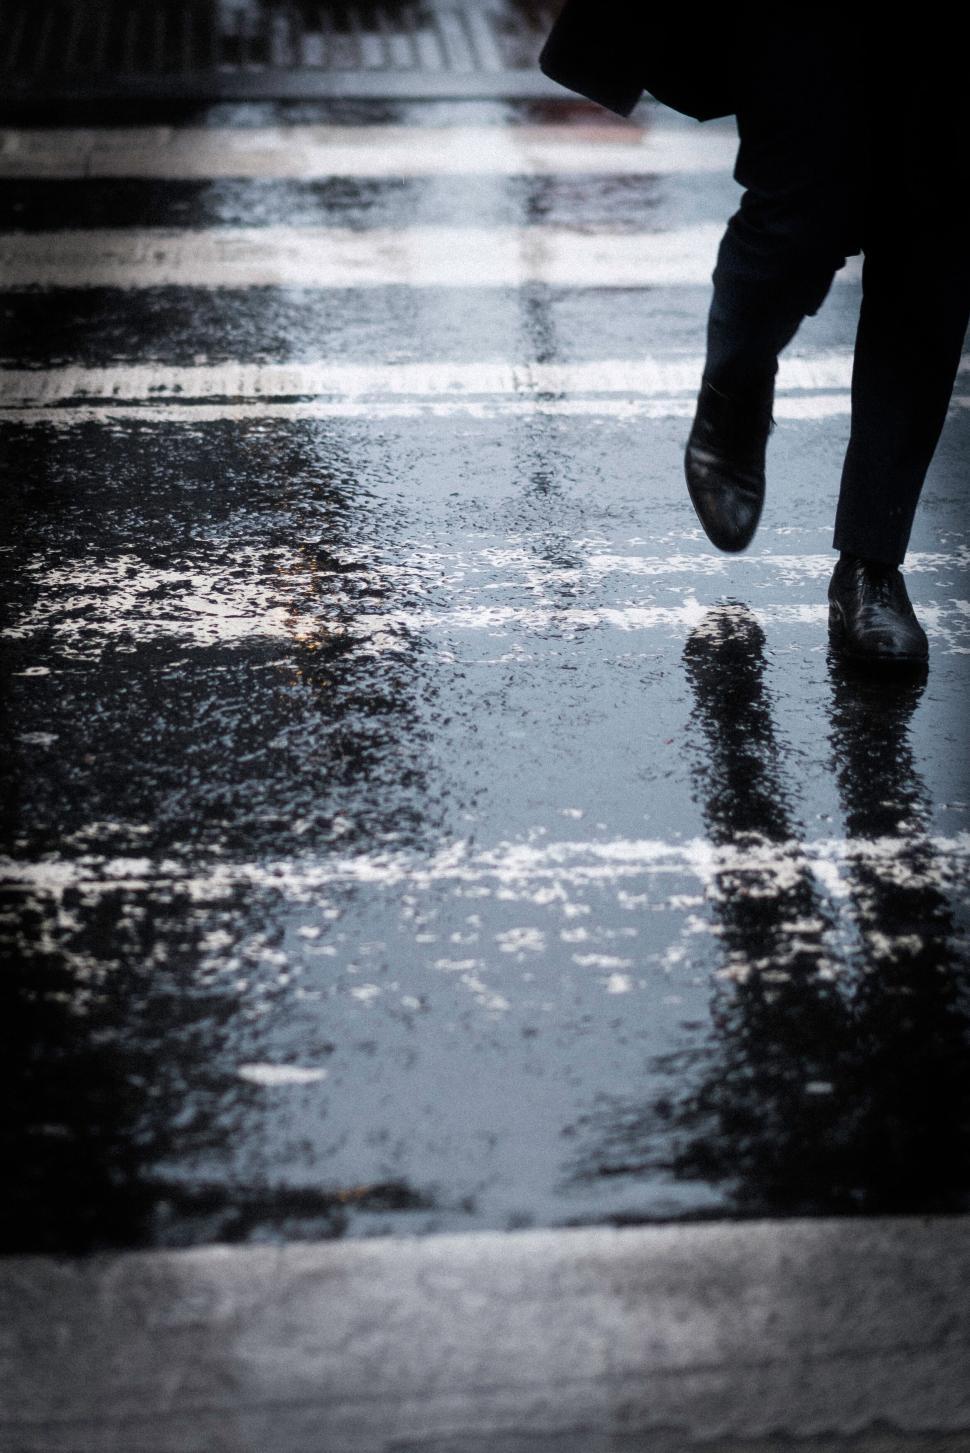 Free Image of Rain-soaked pedestrian crossing urban street 